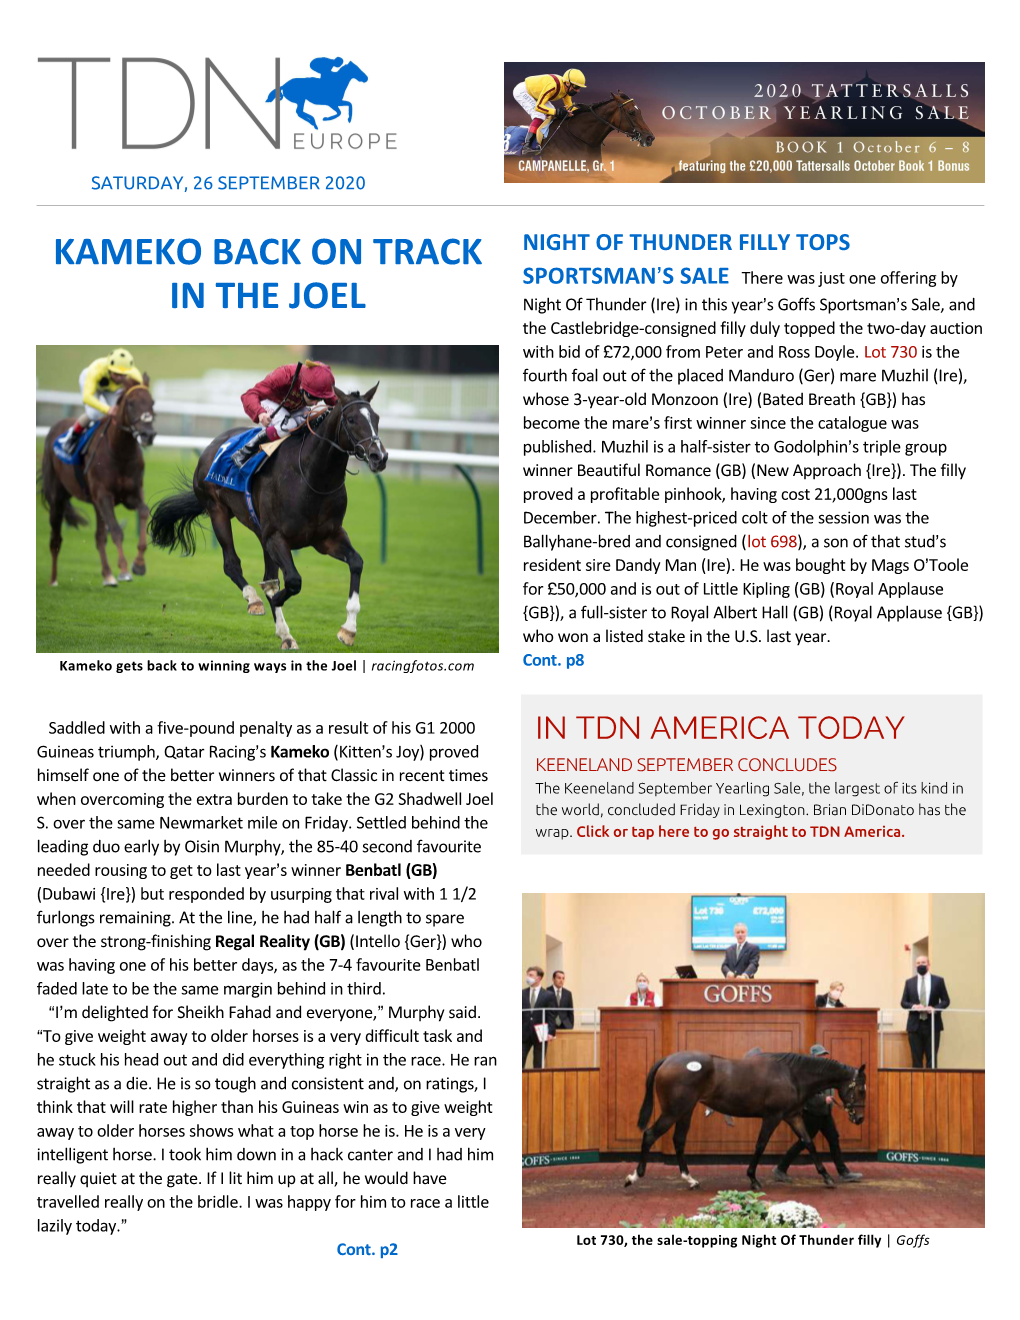 Kameko Back on Track in the Joel Cont